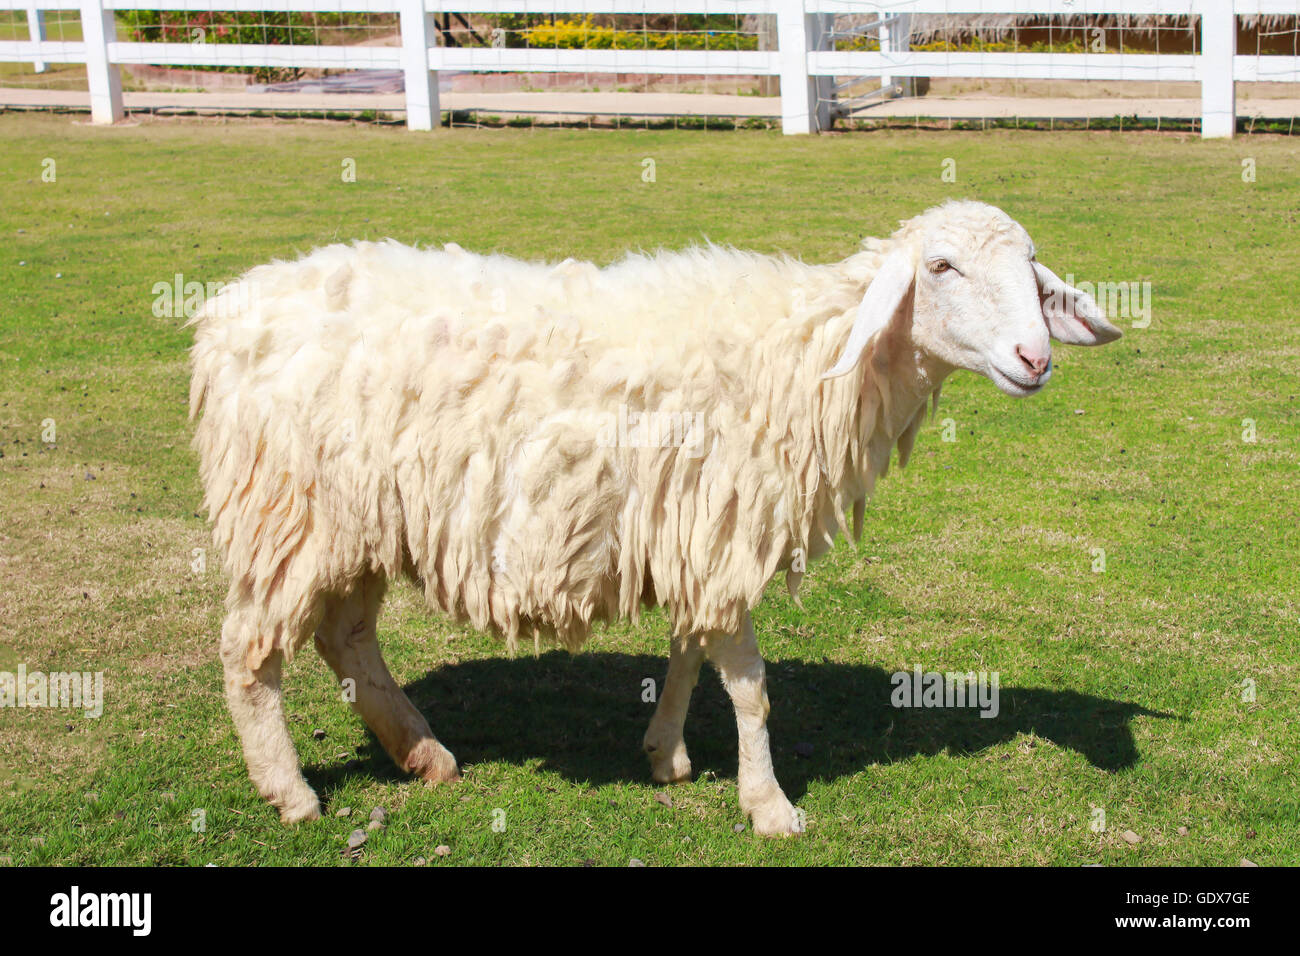 Sheep in farm field Stock Photo